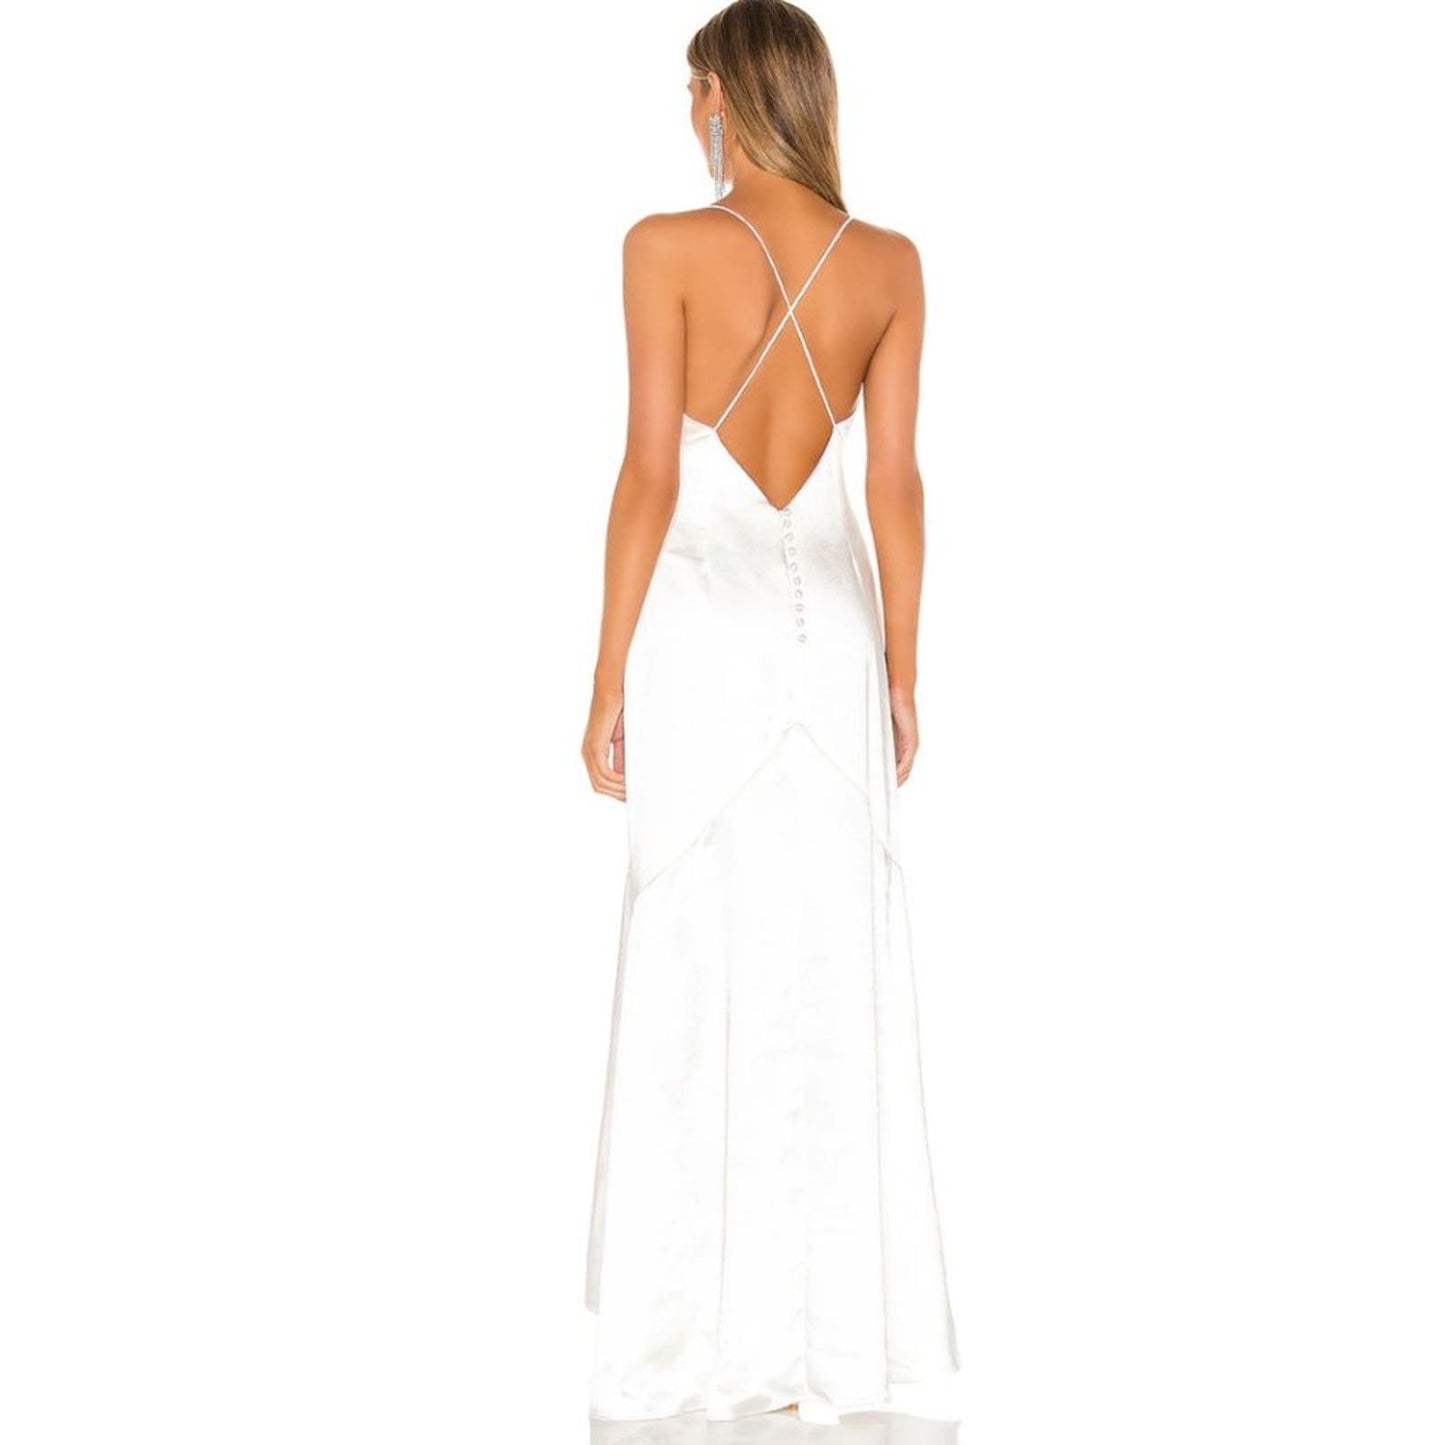 ELLIATT Aisle Dress in White NWT Size Medium